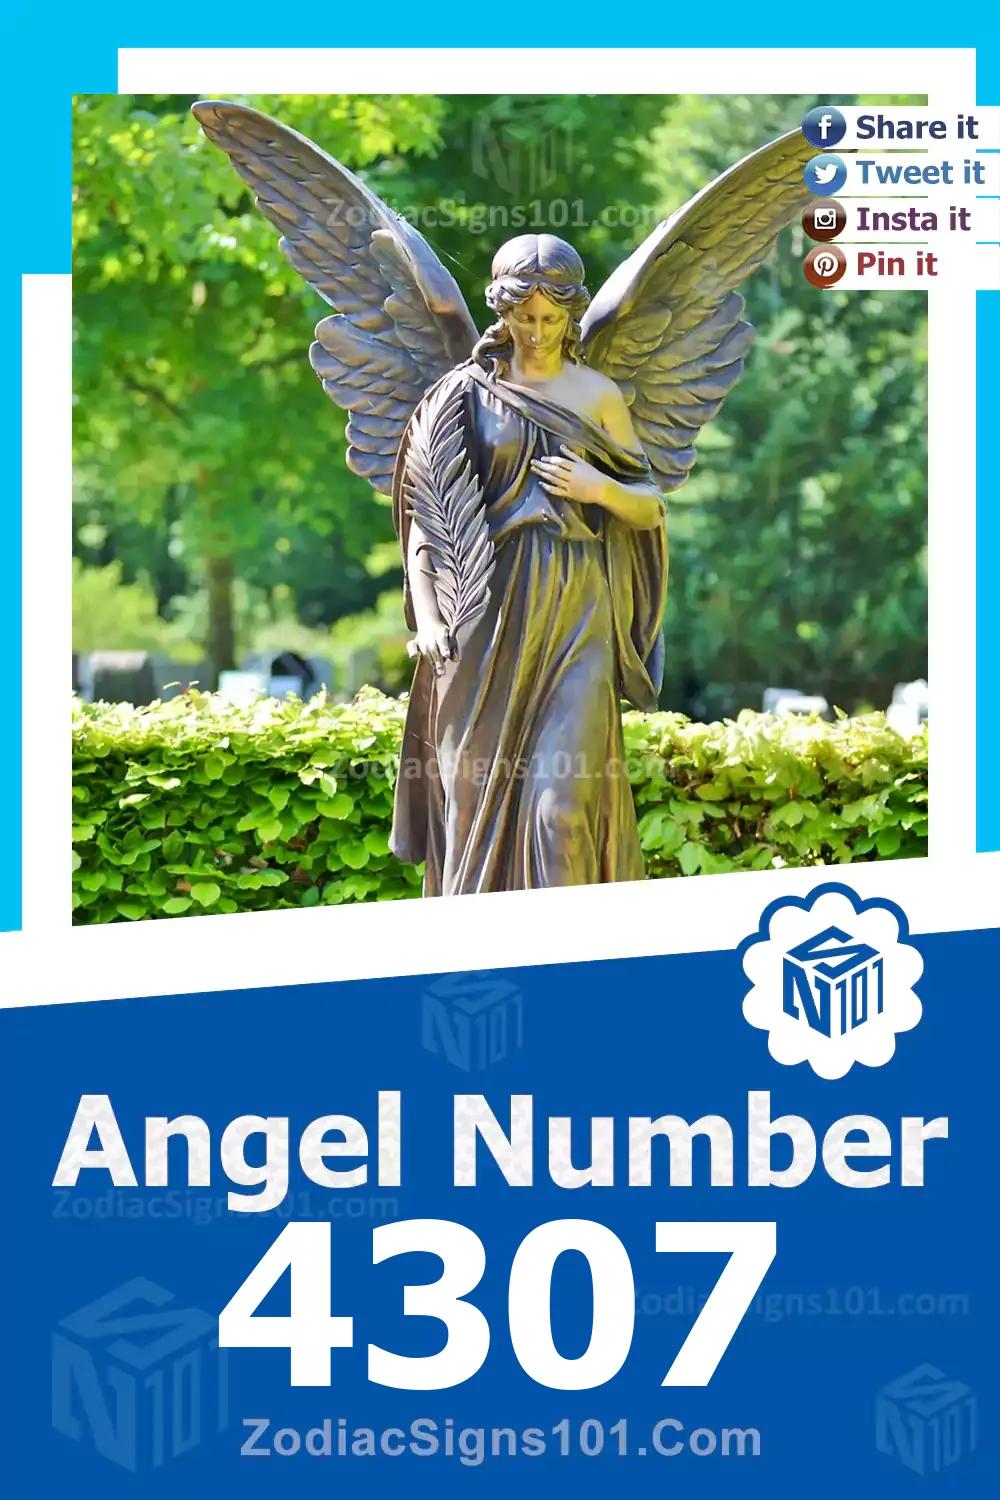 4307-Angel-Number-Meaning.jpg